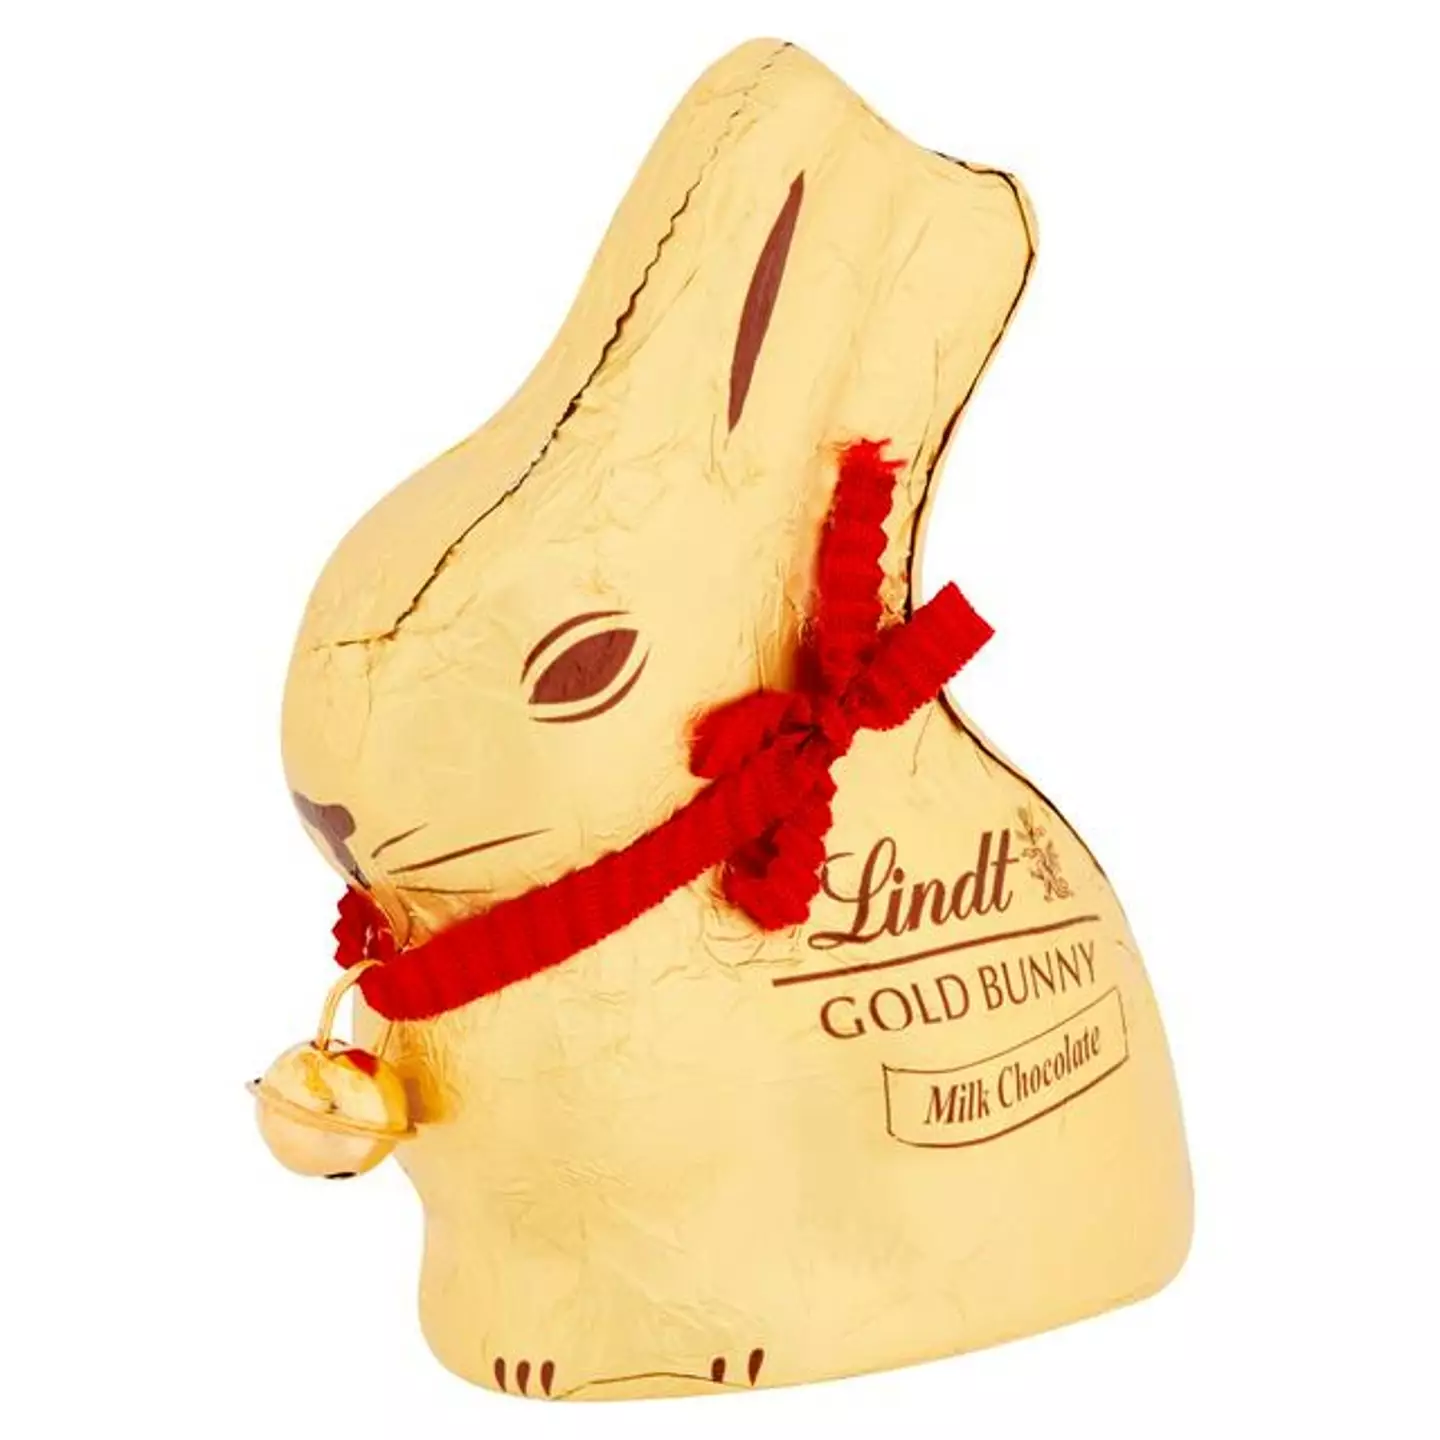 Lindt's chocolate bunny.